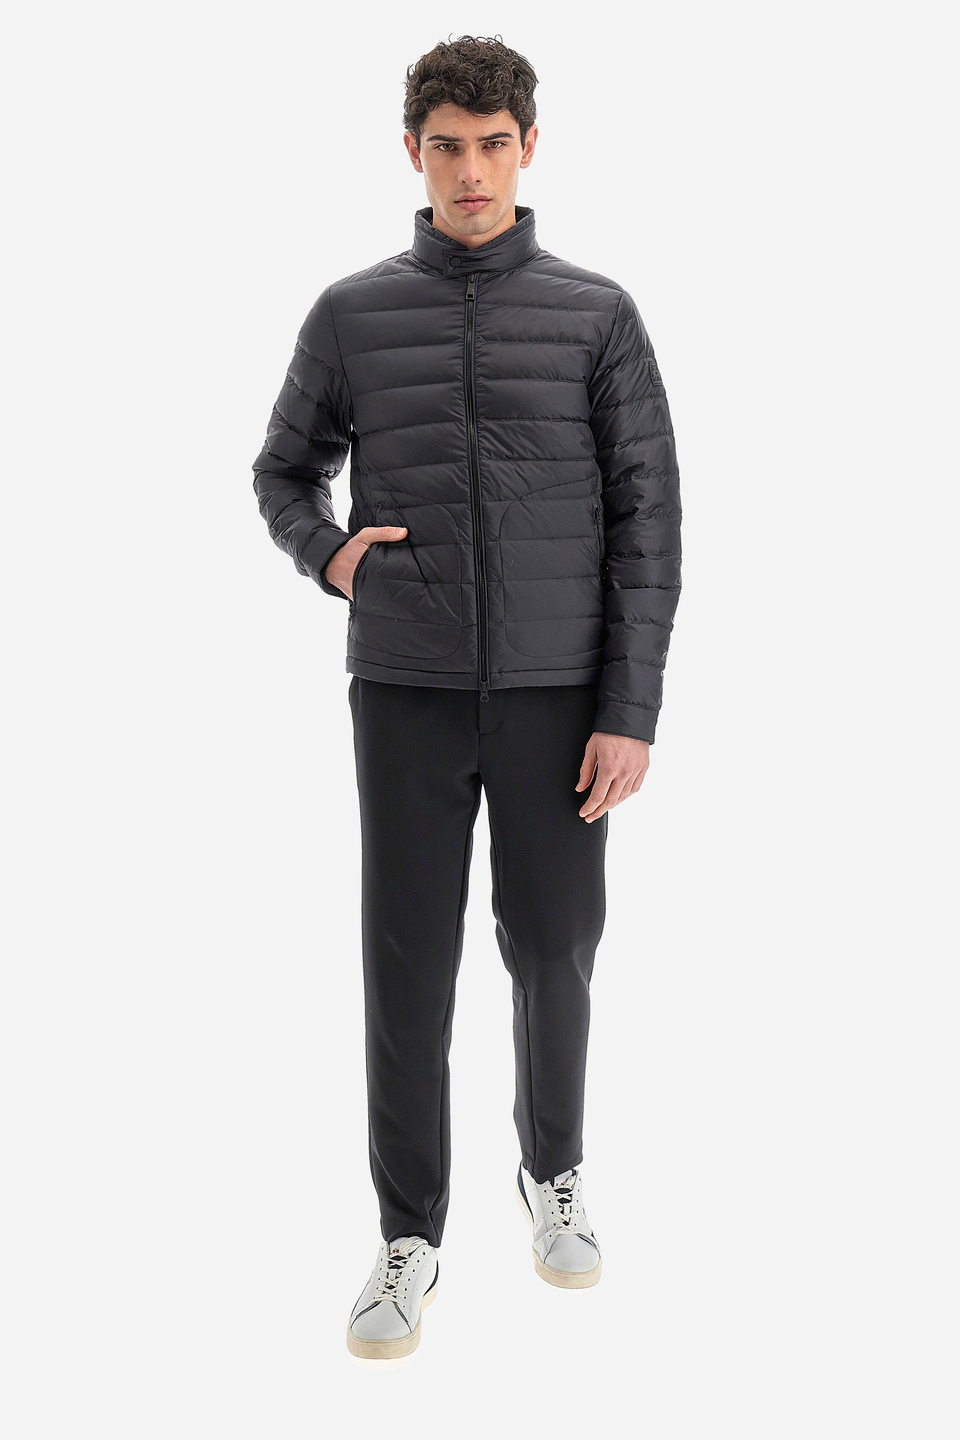 Outdoor giacca uomo regular fit - Way | La Martina - Official Online Shop